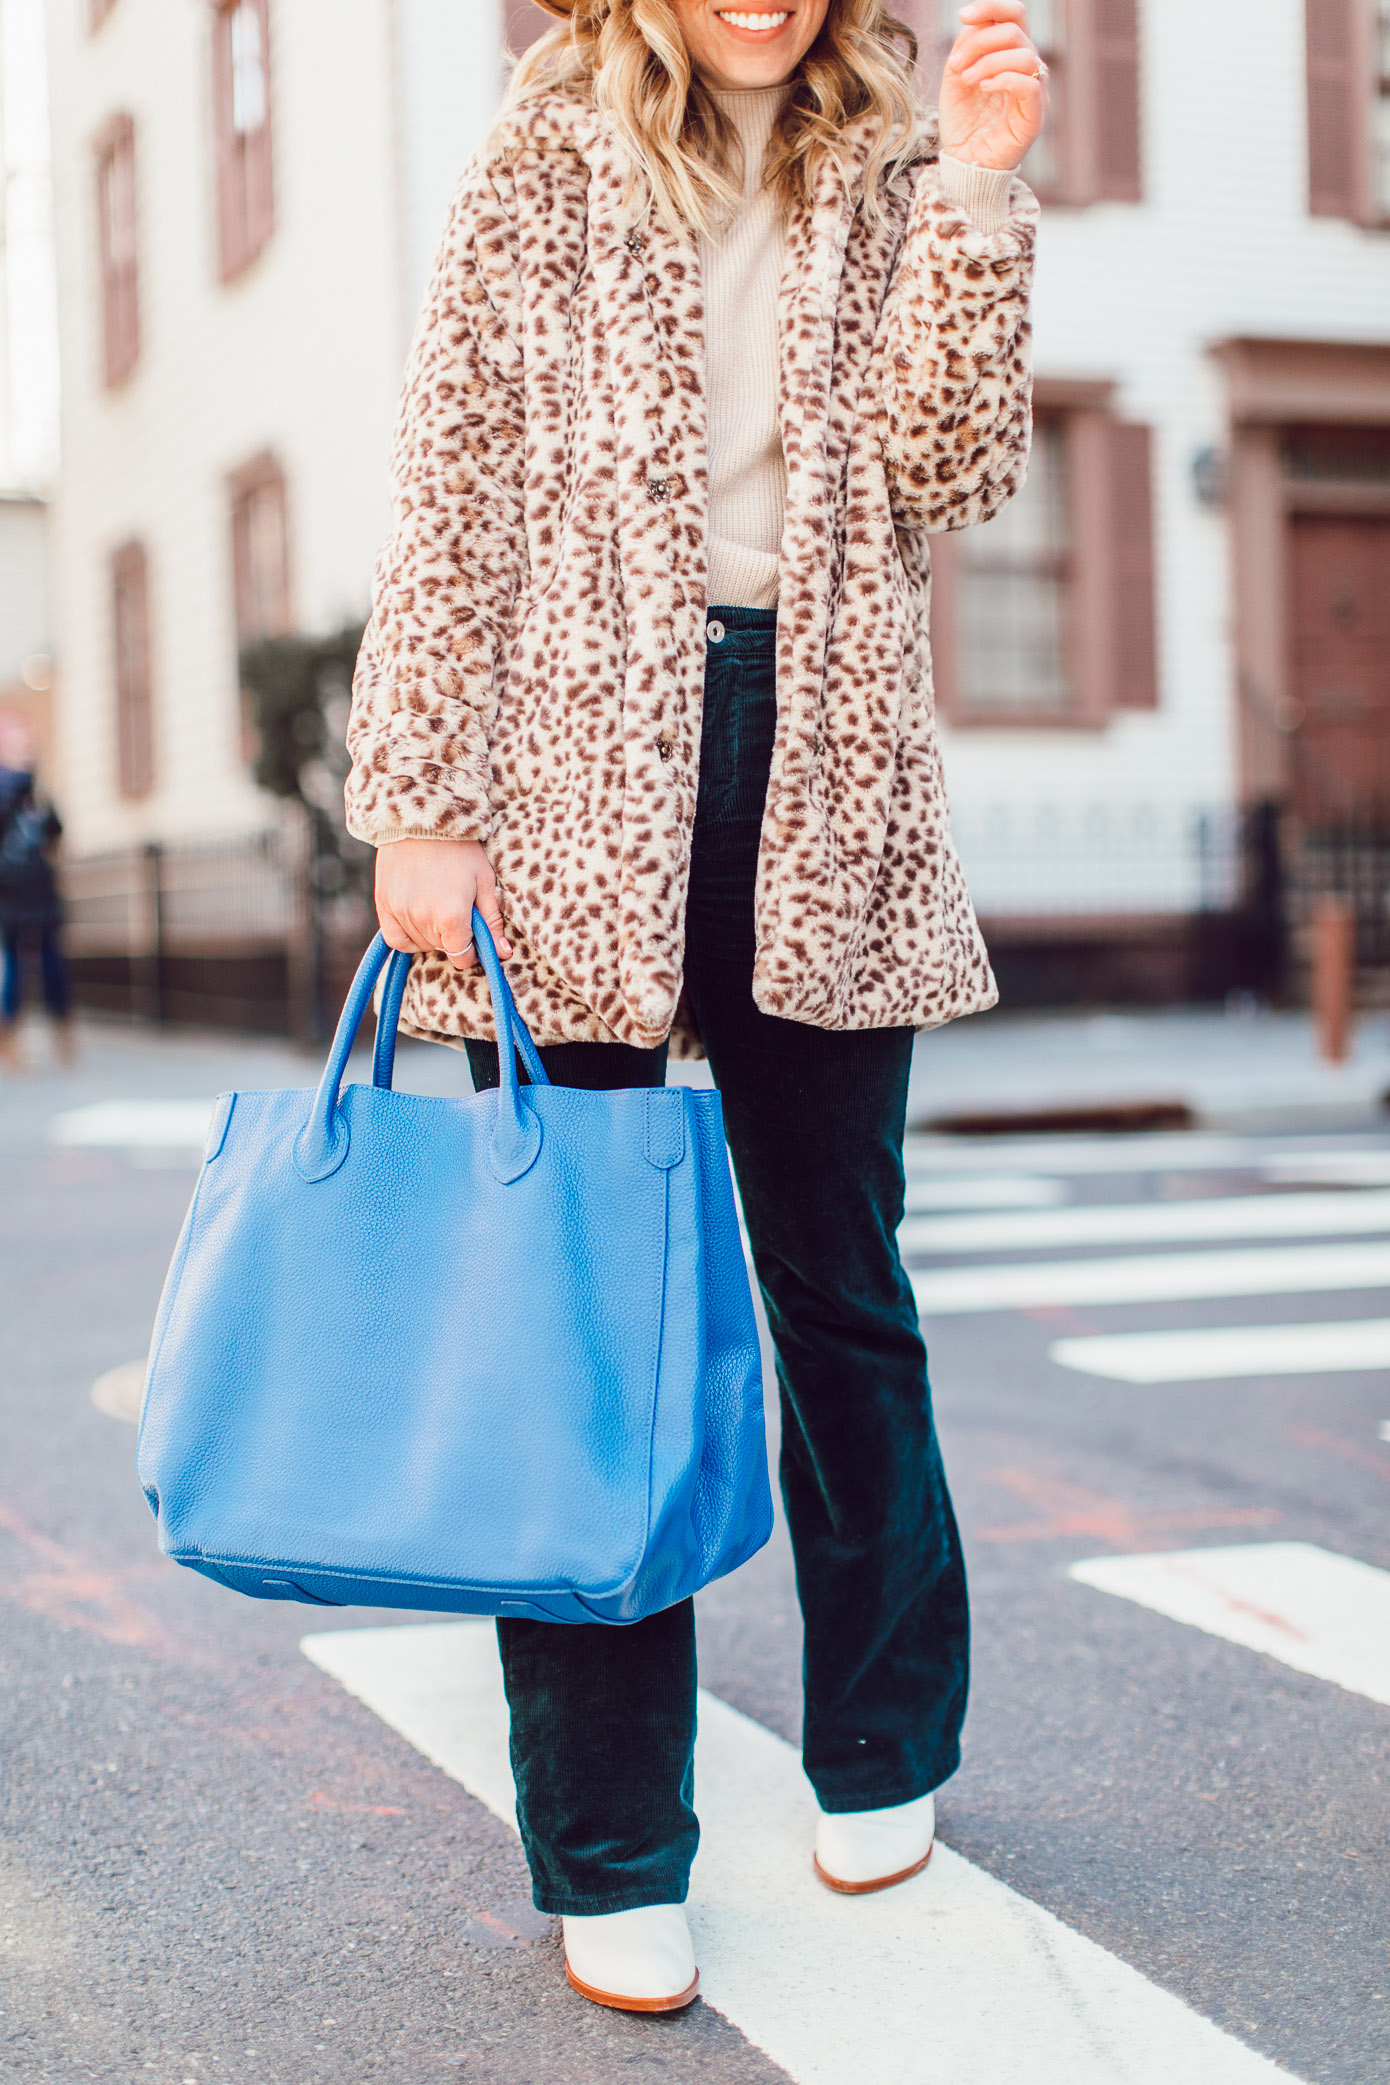 Winter Wardrobe Basics | Retro Outfit Idea - Faux Fur Leopard Coat, Corduroy Pants, Bright Blue Leather Tote, Bronze Felt Hat, White Booties featured on Louella Reese